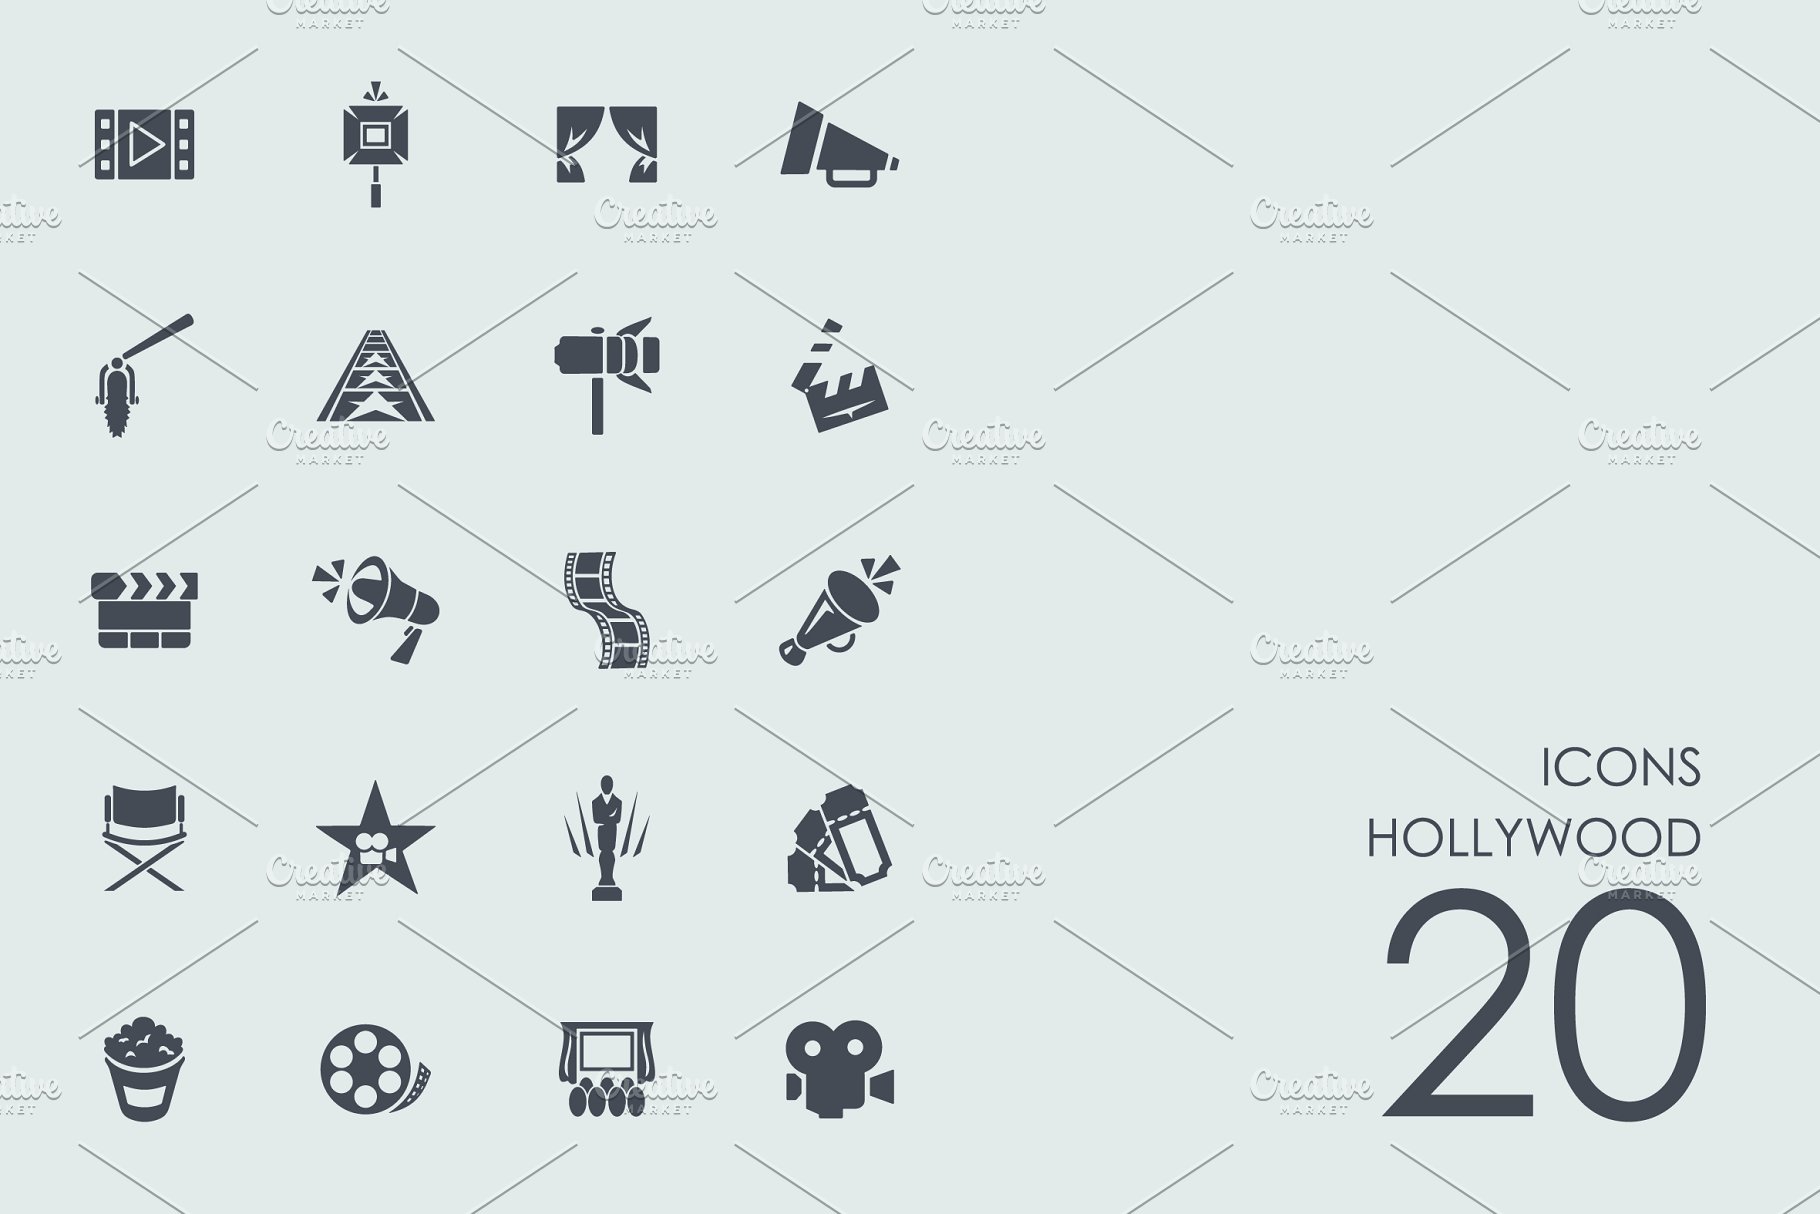 好莱坞电影主题图标 Hollywood icons #921